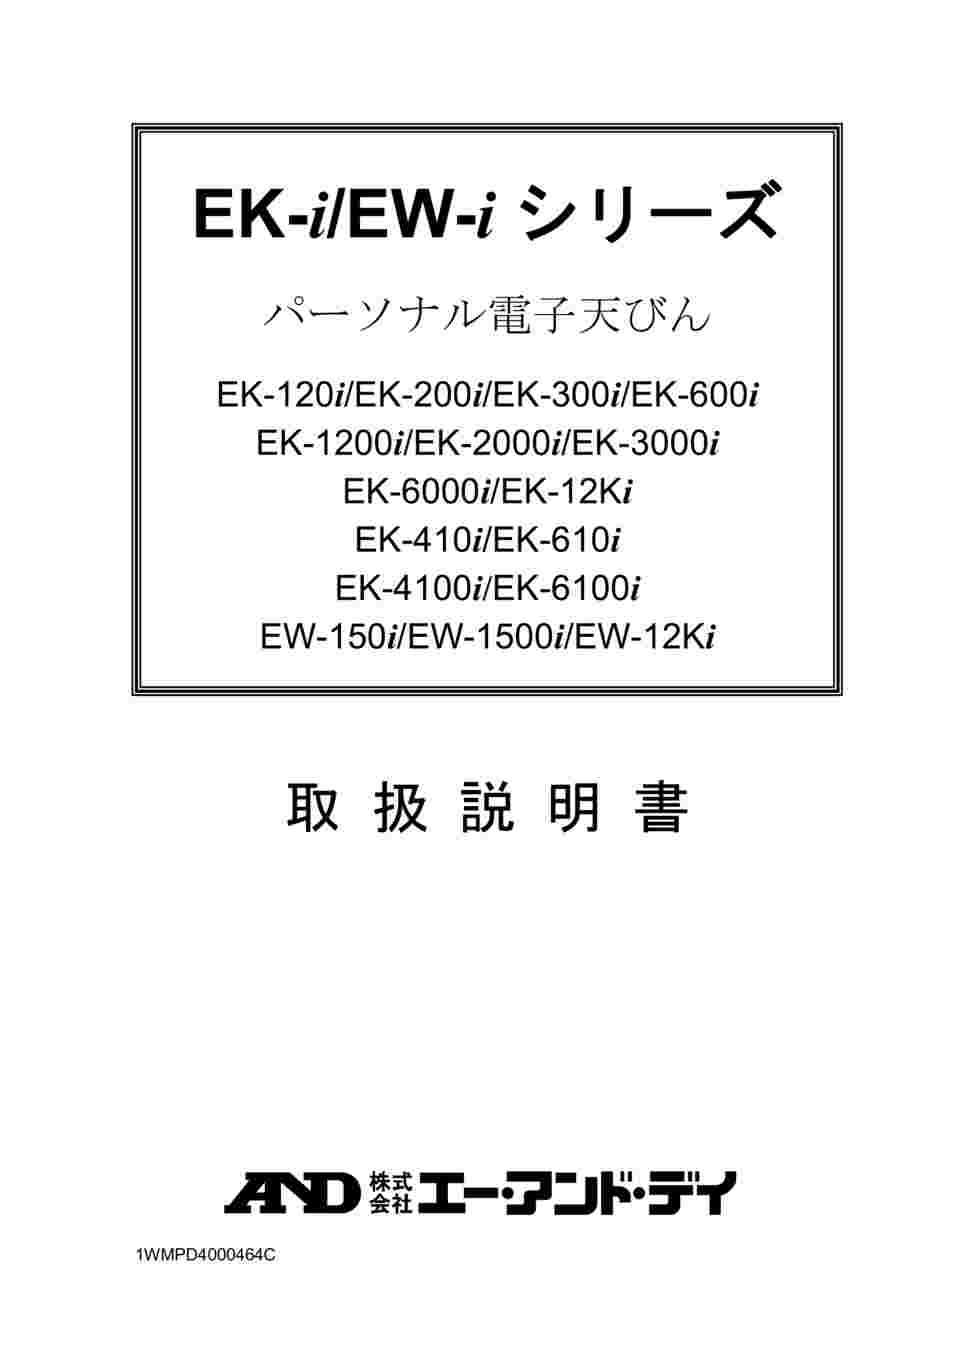 1-6842-01-56 パーソナル電子天秤 英語版校正証明書付 EW-150i 【AXEL